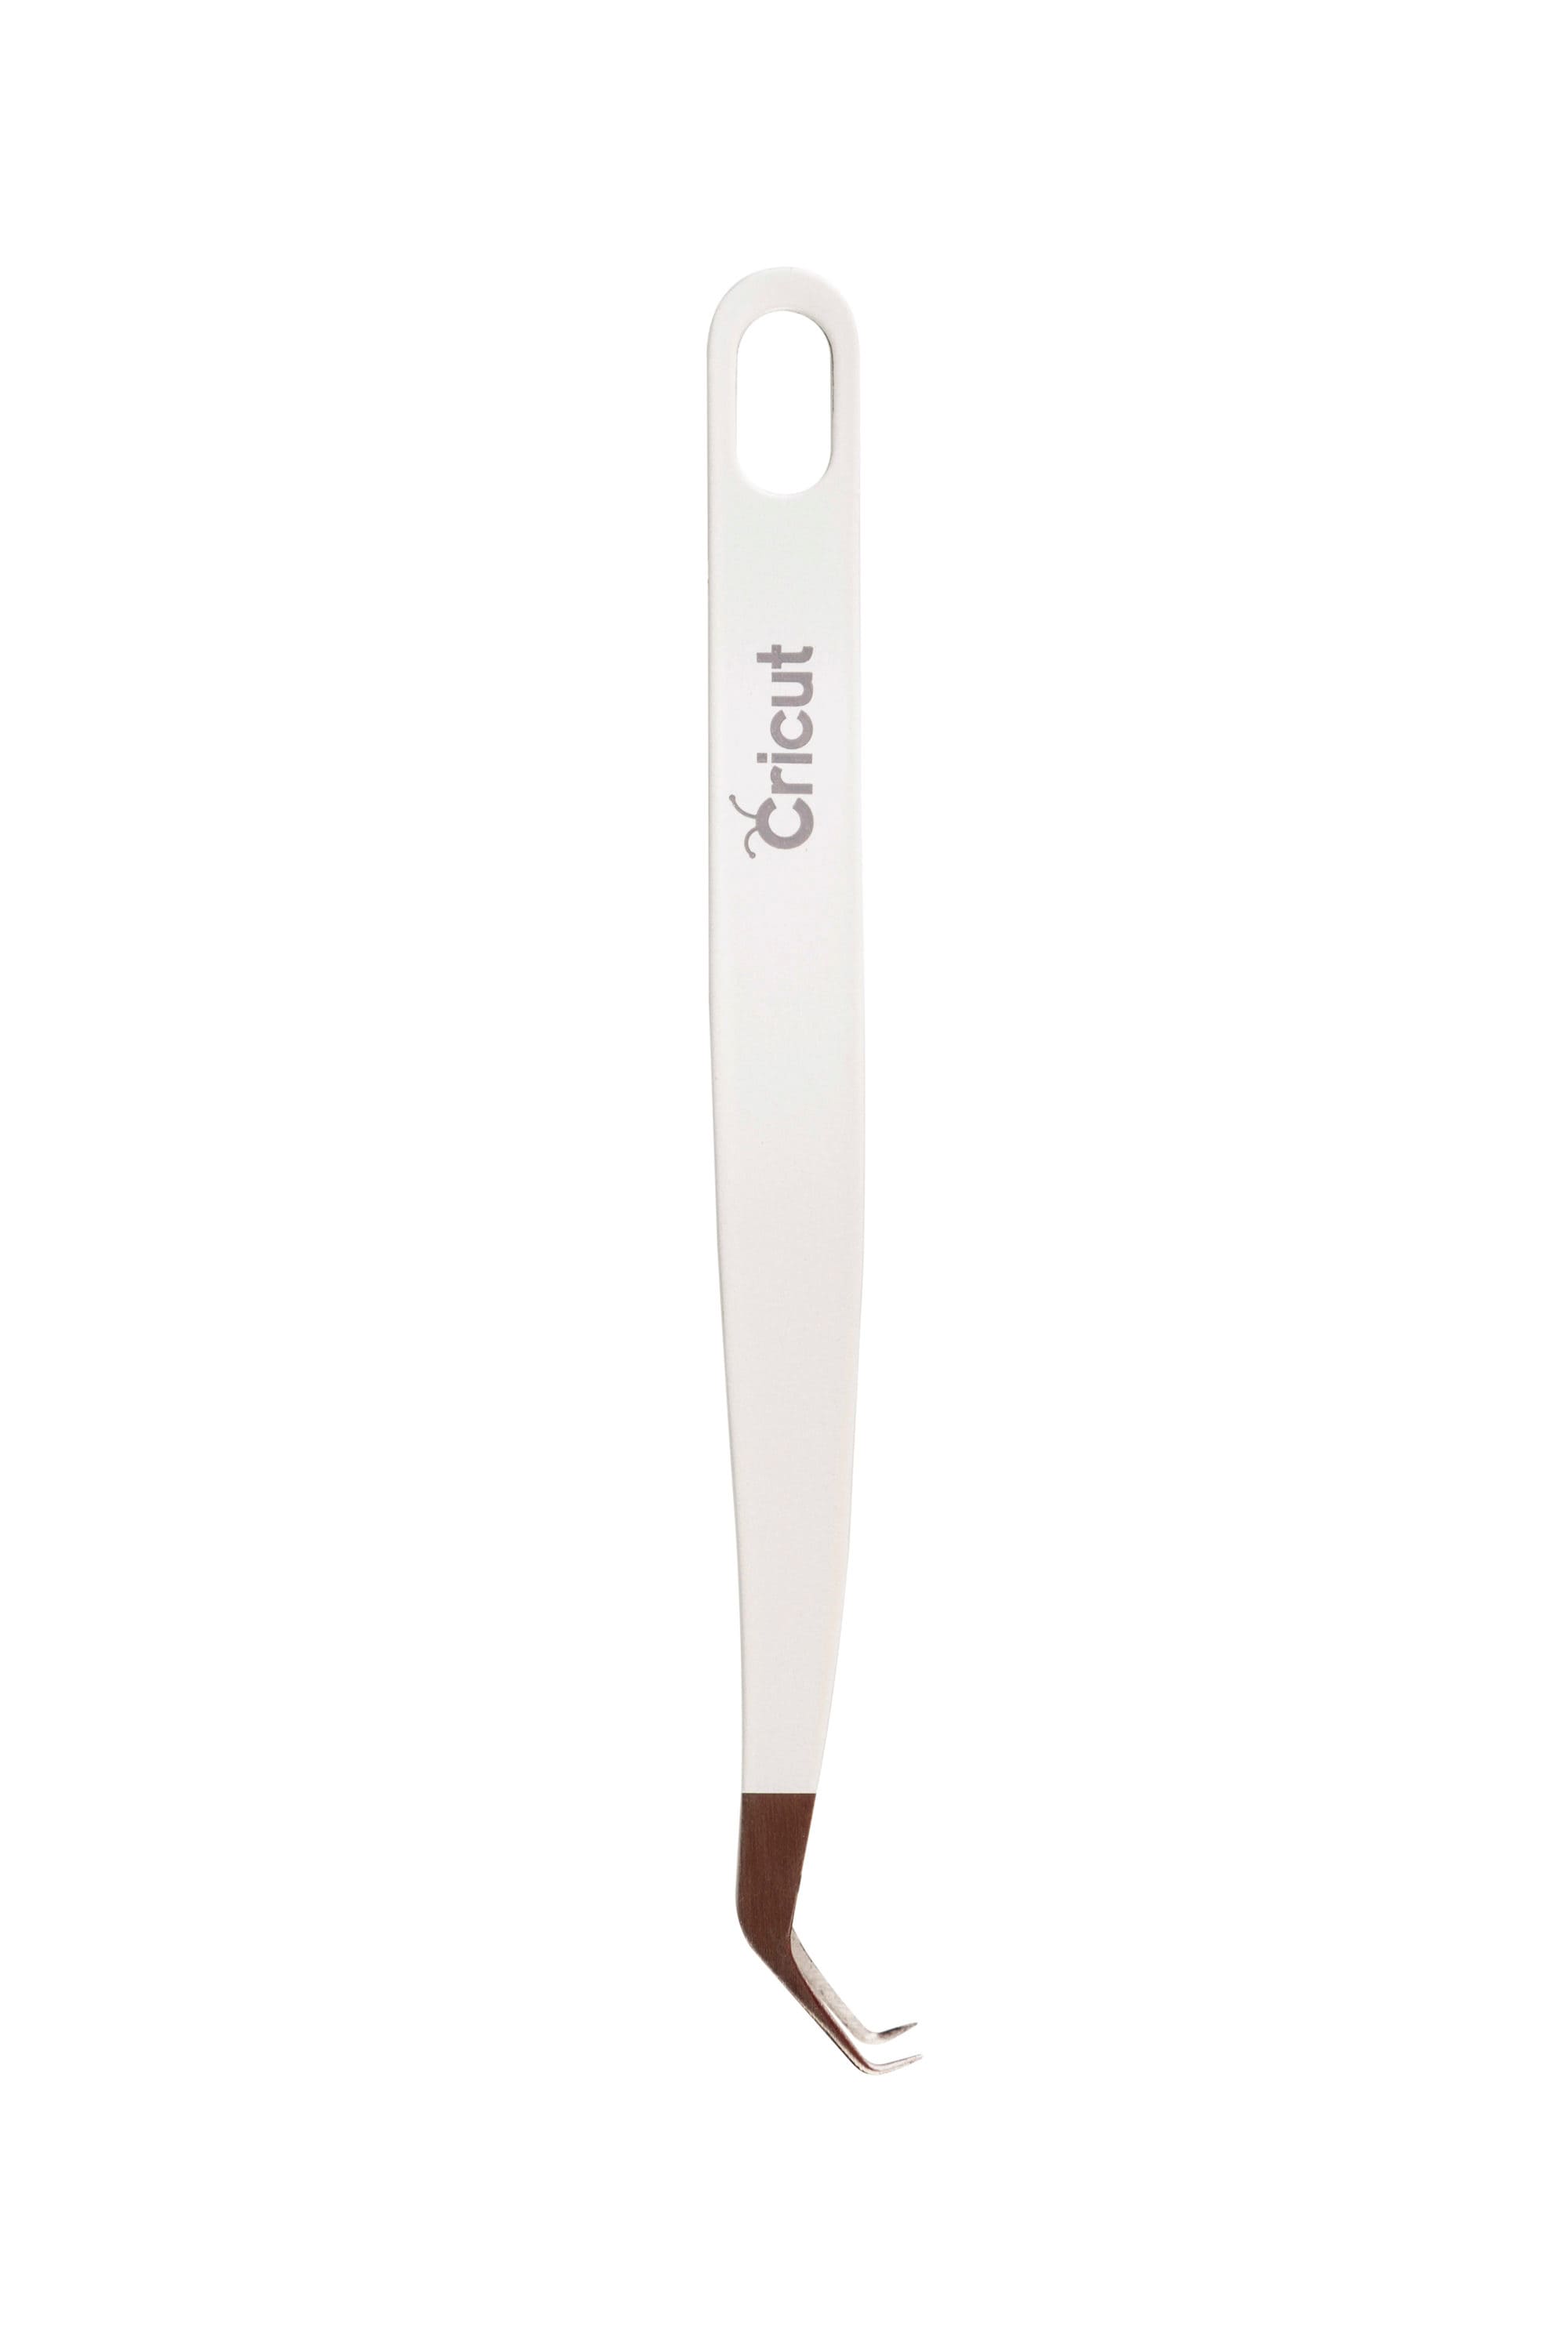 Cricut Weeding Tool Set, Weeder, Hook, Piercing & 2x Tweezers - Model  2004233